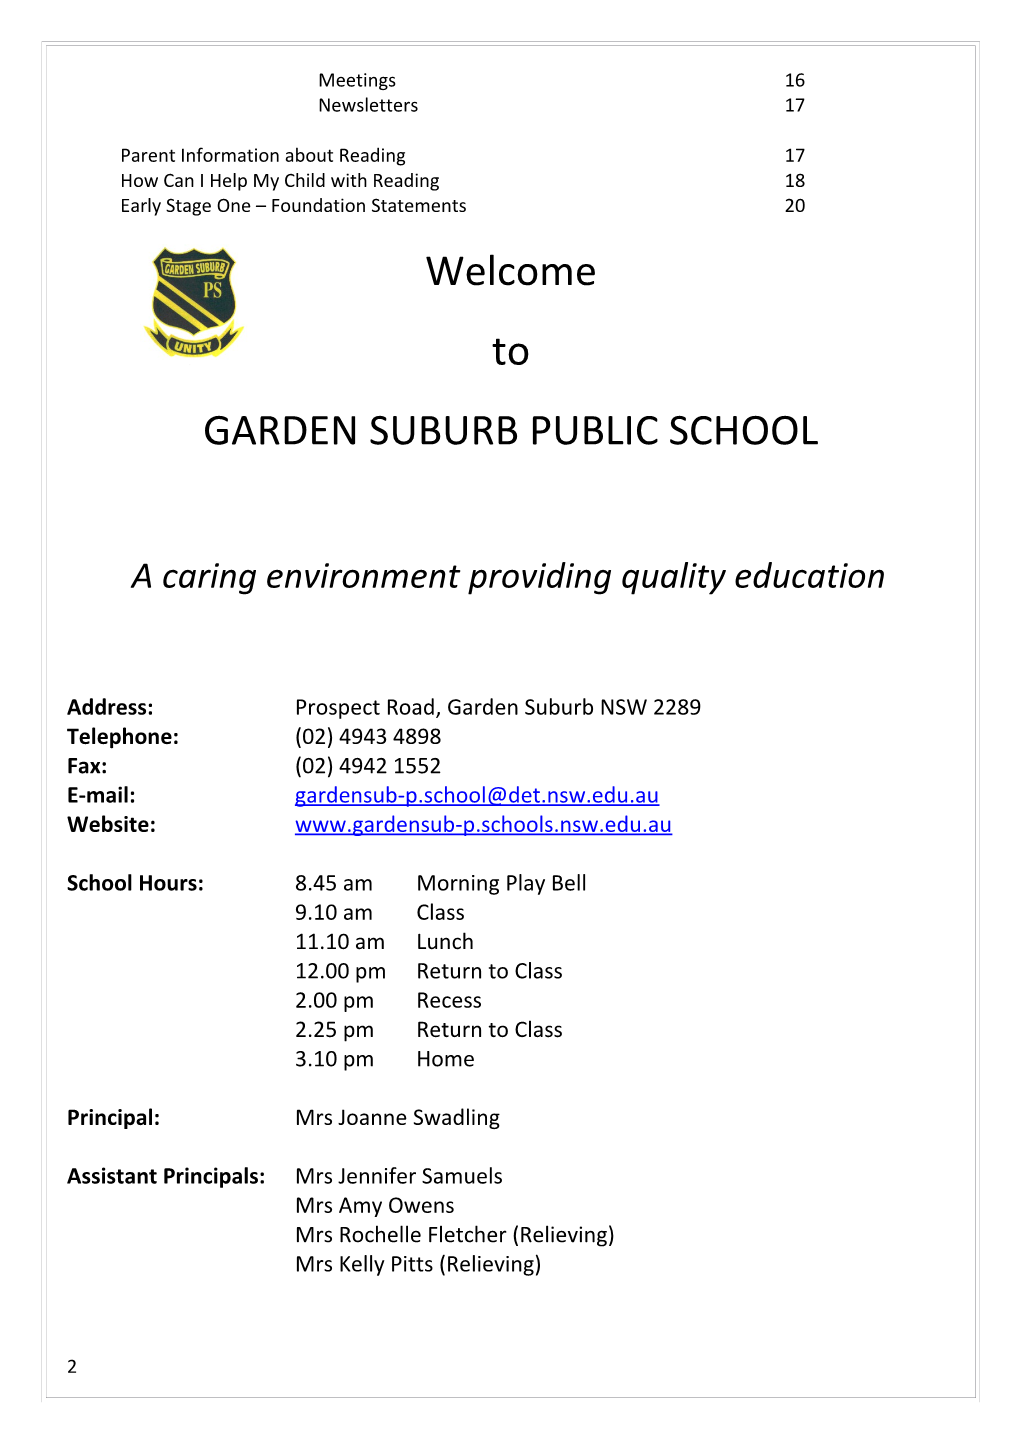 Garden Suburb Public School